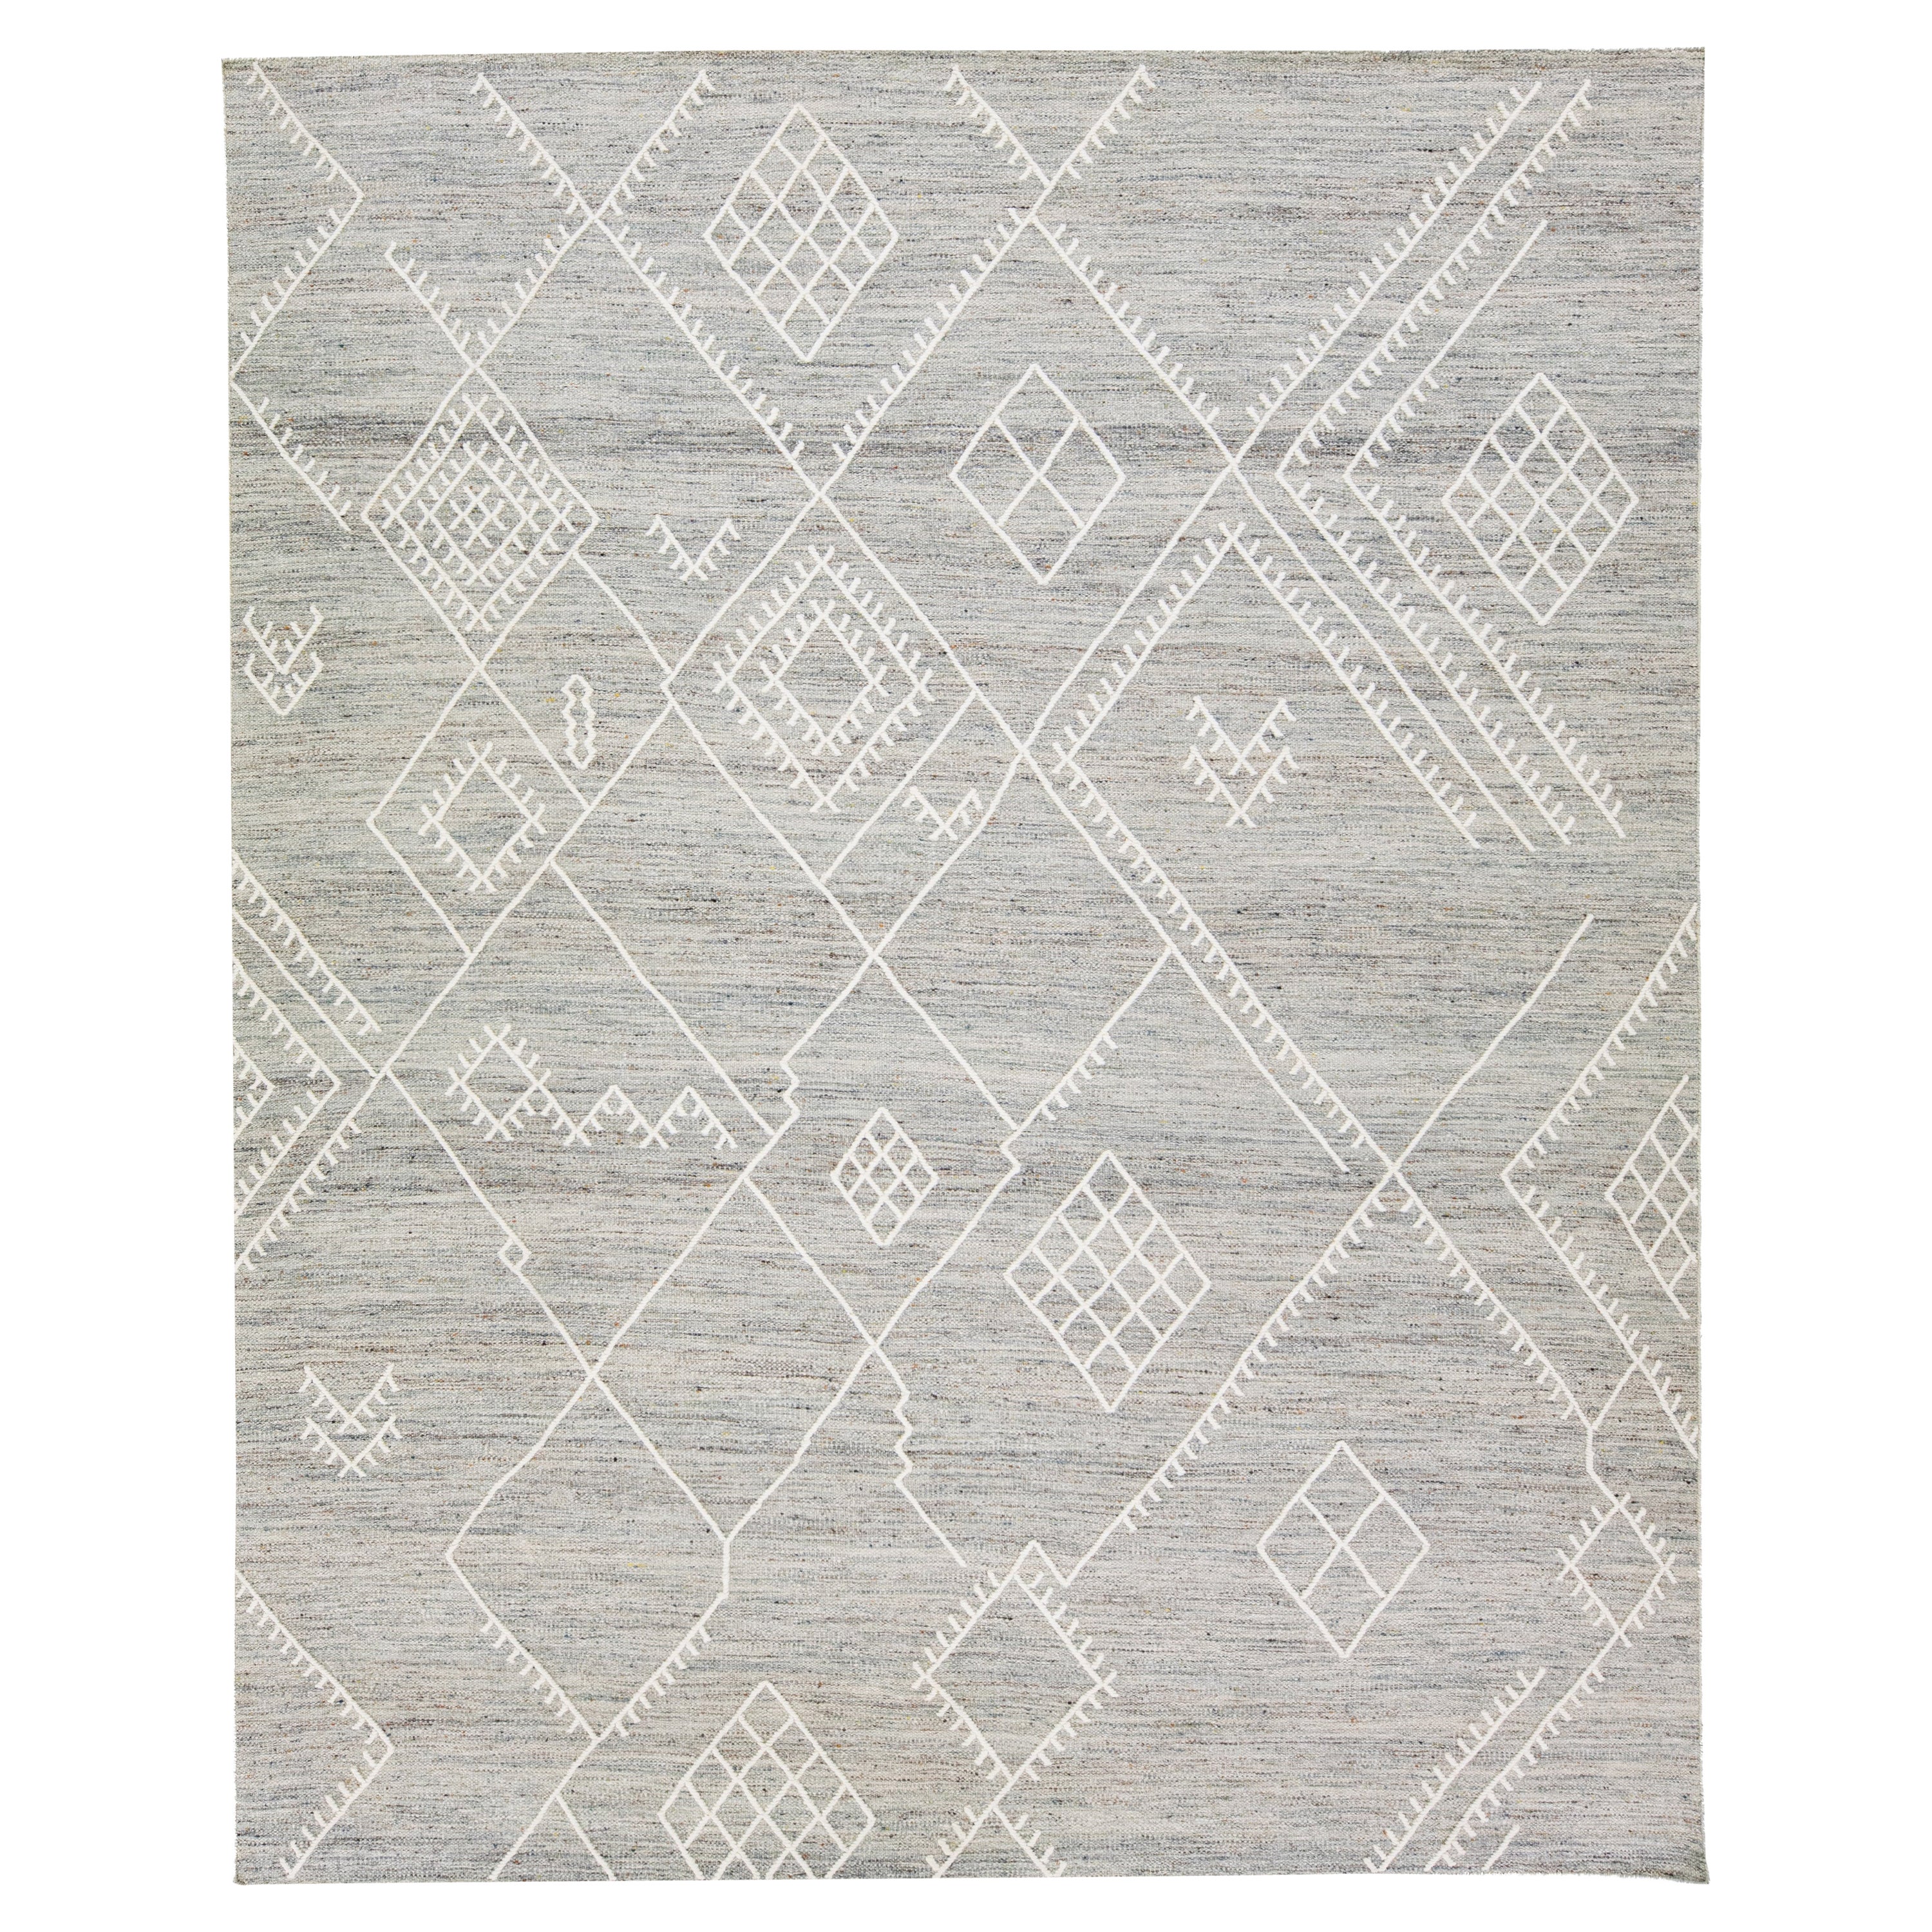 Apadana's Nantucket Collection Flatweave Kilim Coastal Designed Grey Wool Rug